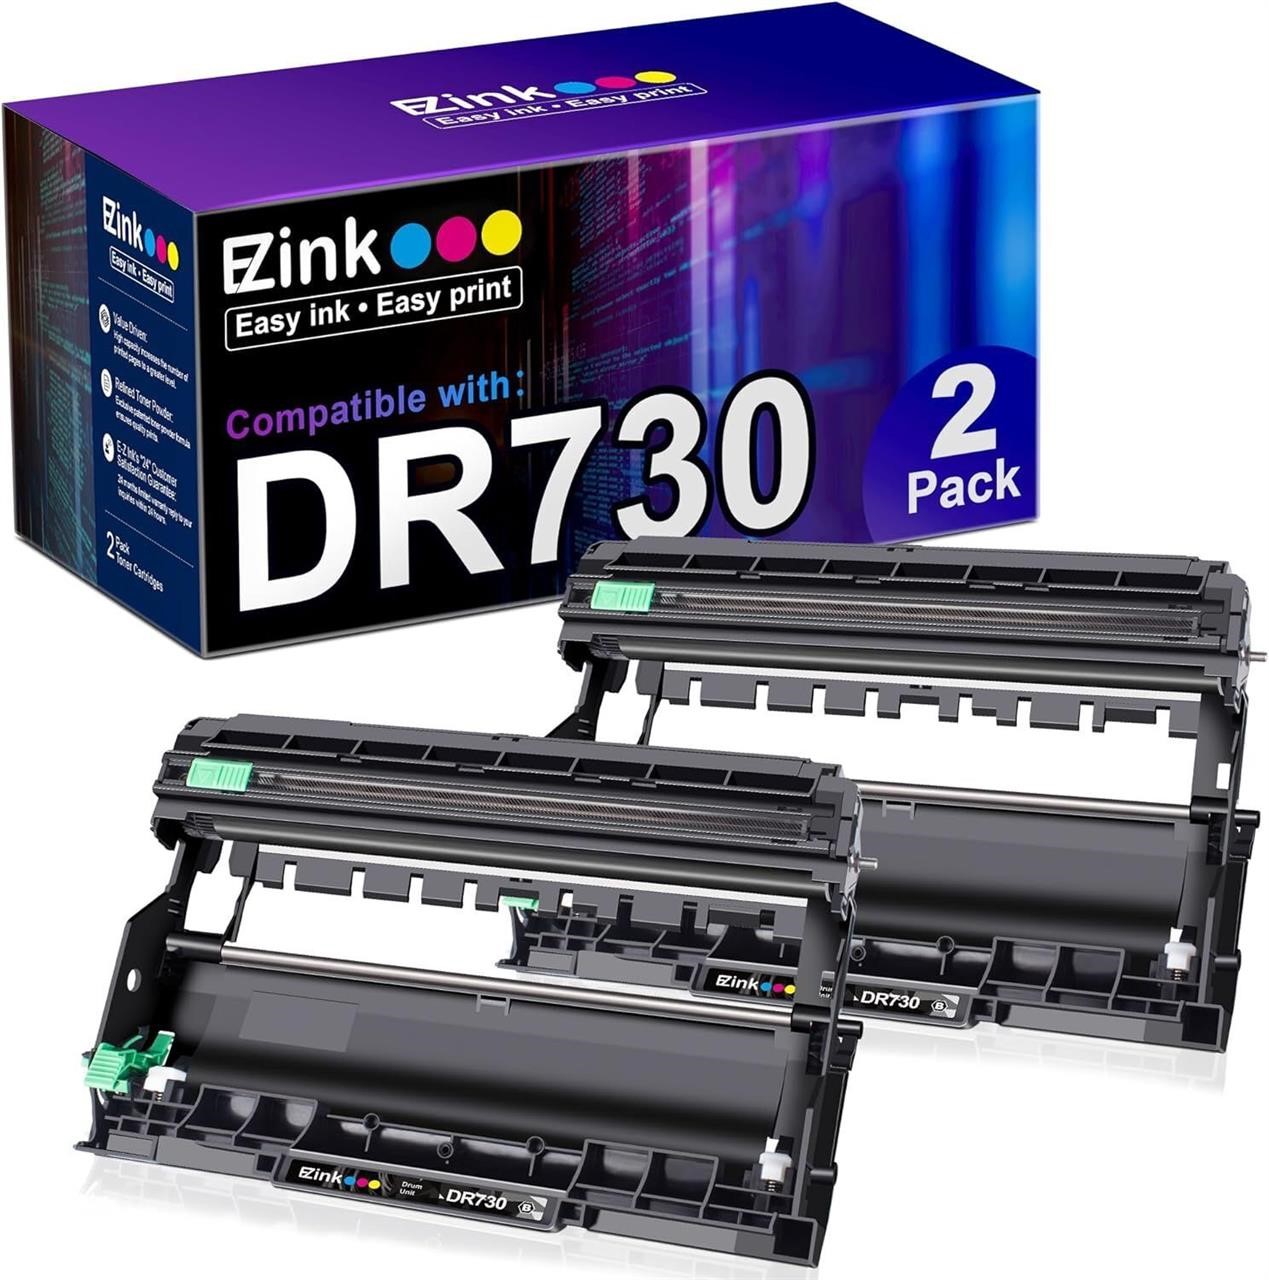 2-Pack DR730 Imaging Unit for top ink